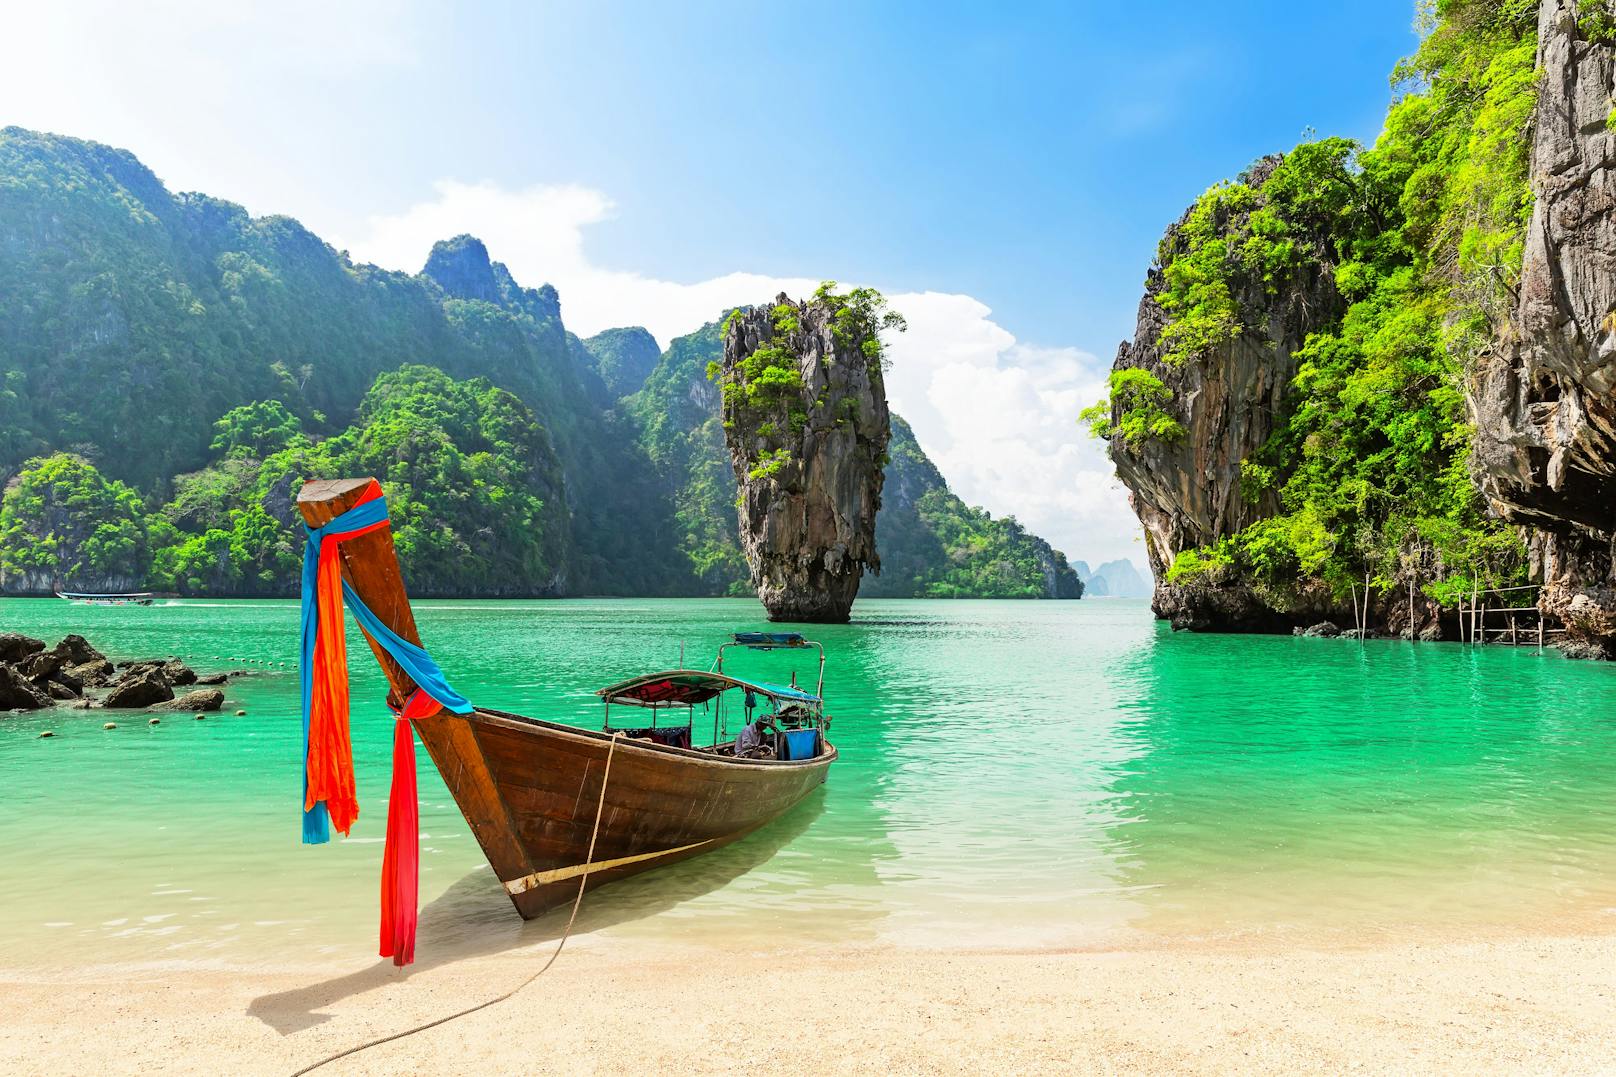 Berühmt aus einem James-Bond-Film: Der Drehort in der Phang Nga-Bucht liegt nahe der Insel Phuket.